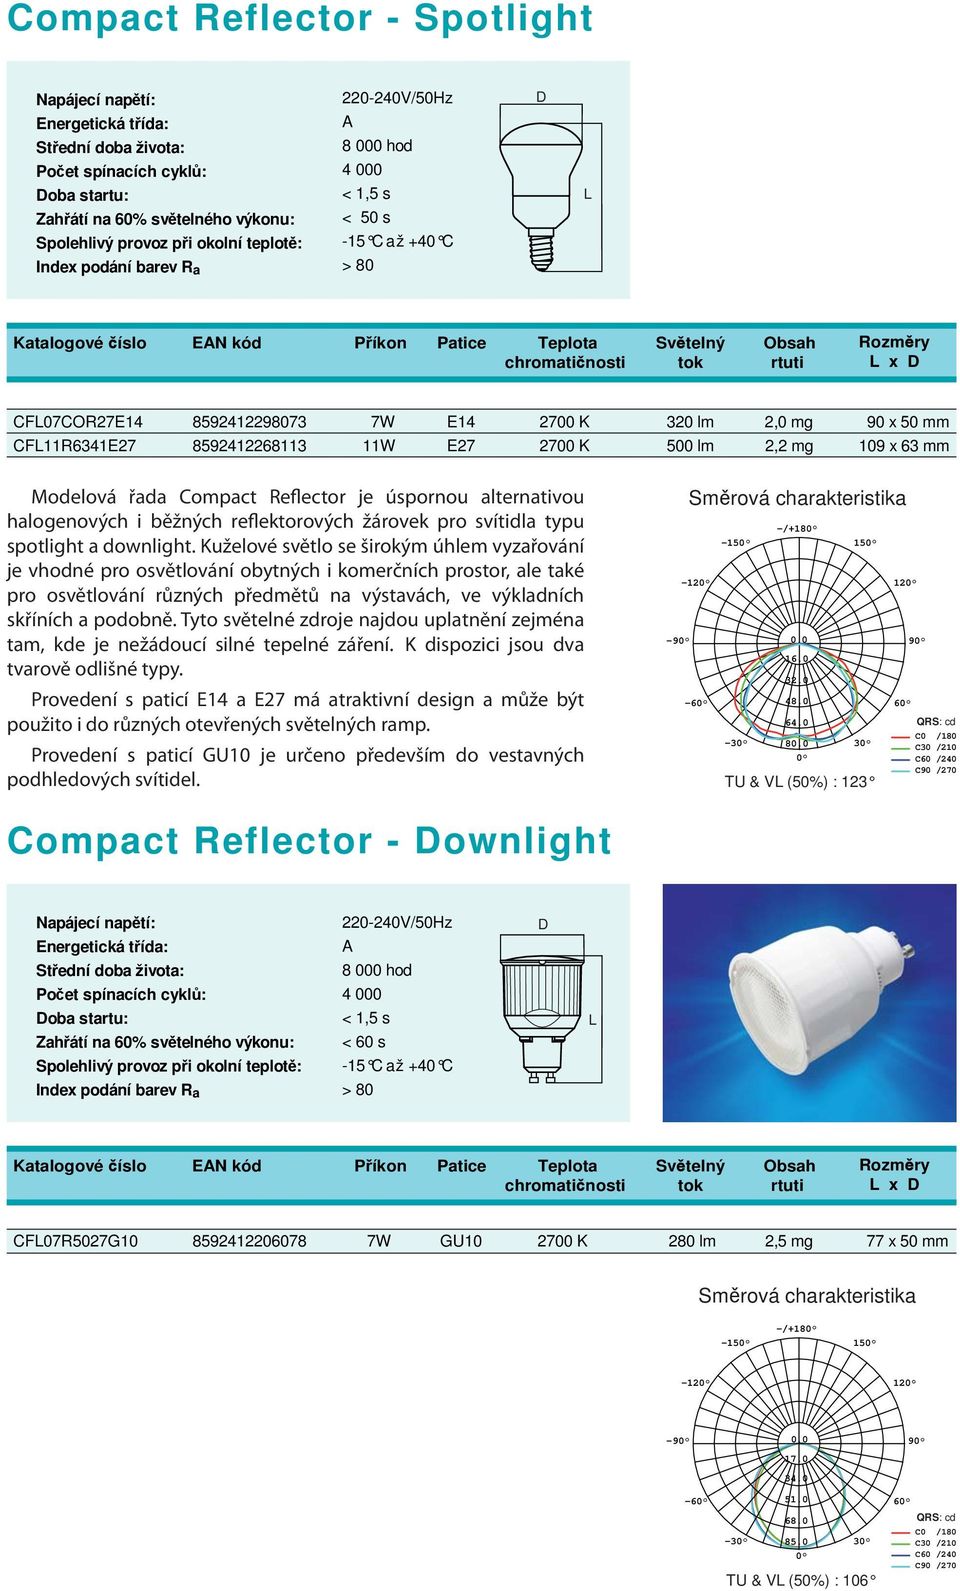 Compact Reflector je úspornou alternativou halogenových i běžných reflektorových žárovek pro svítidla typu spotlight a downlight.